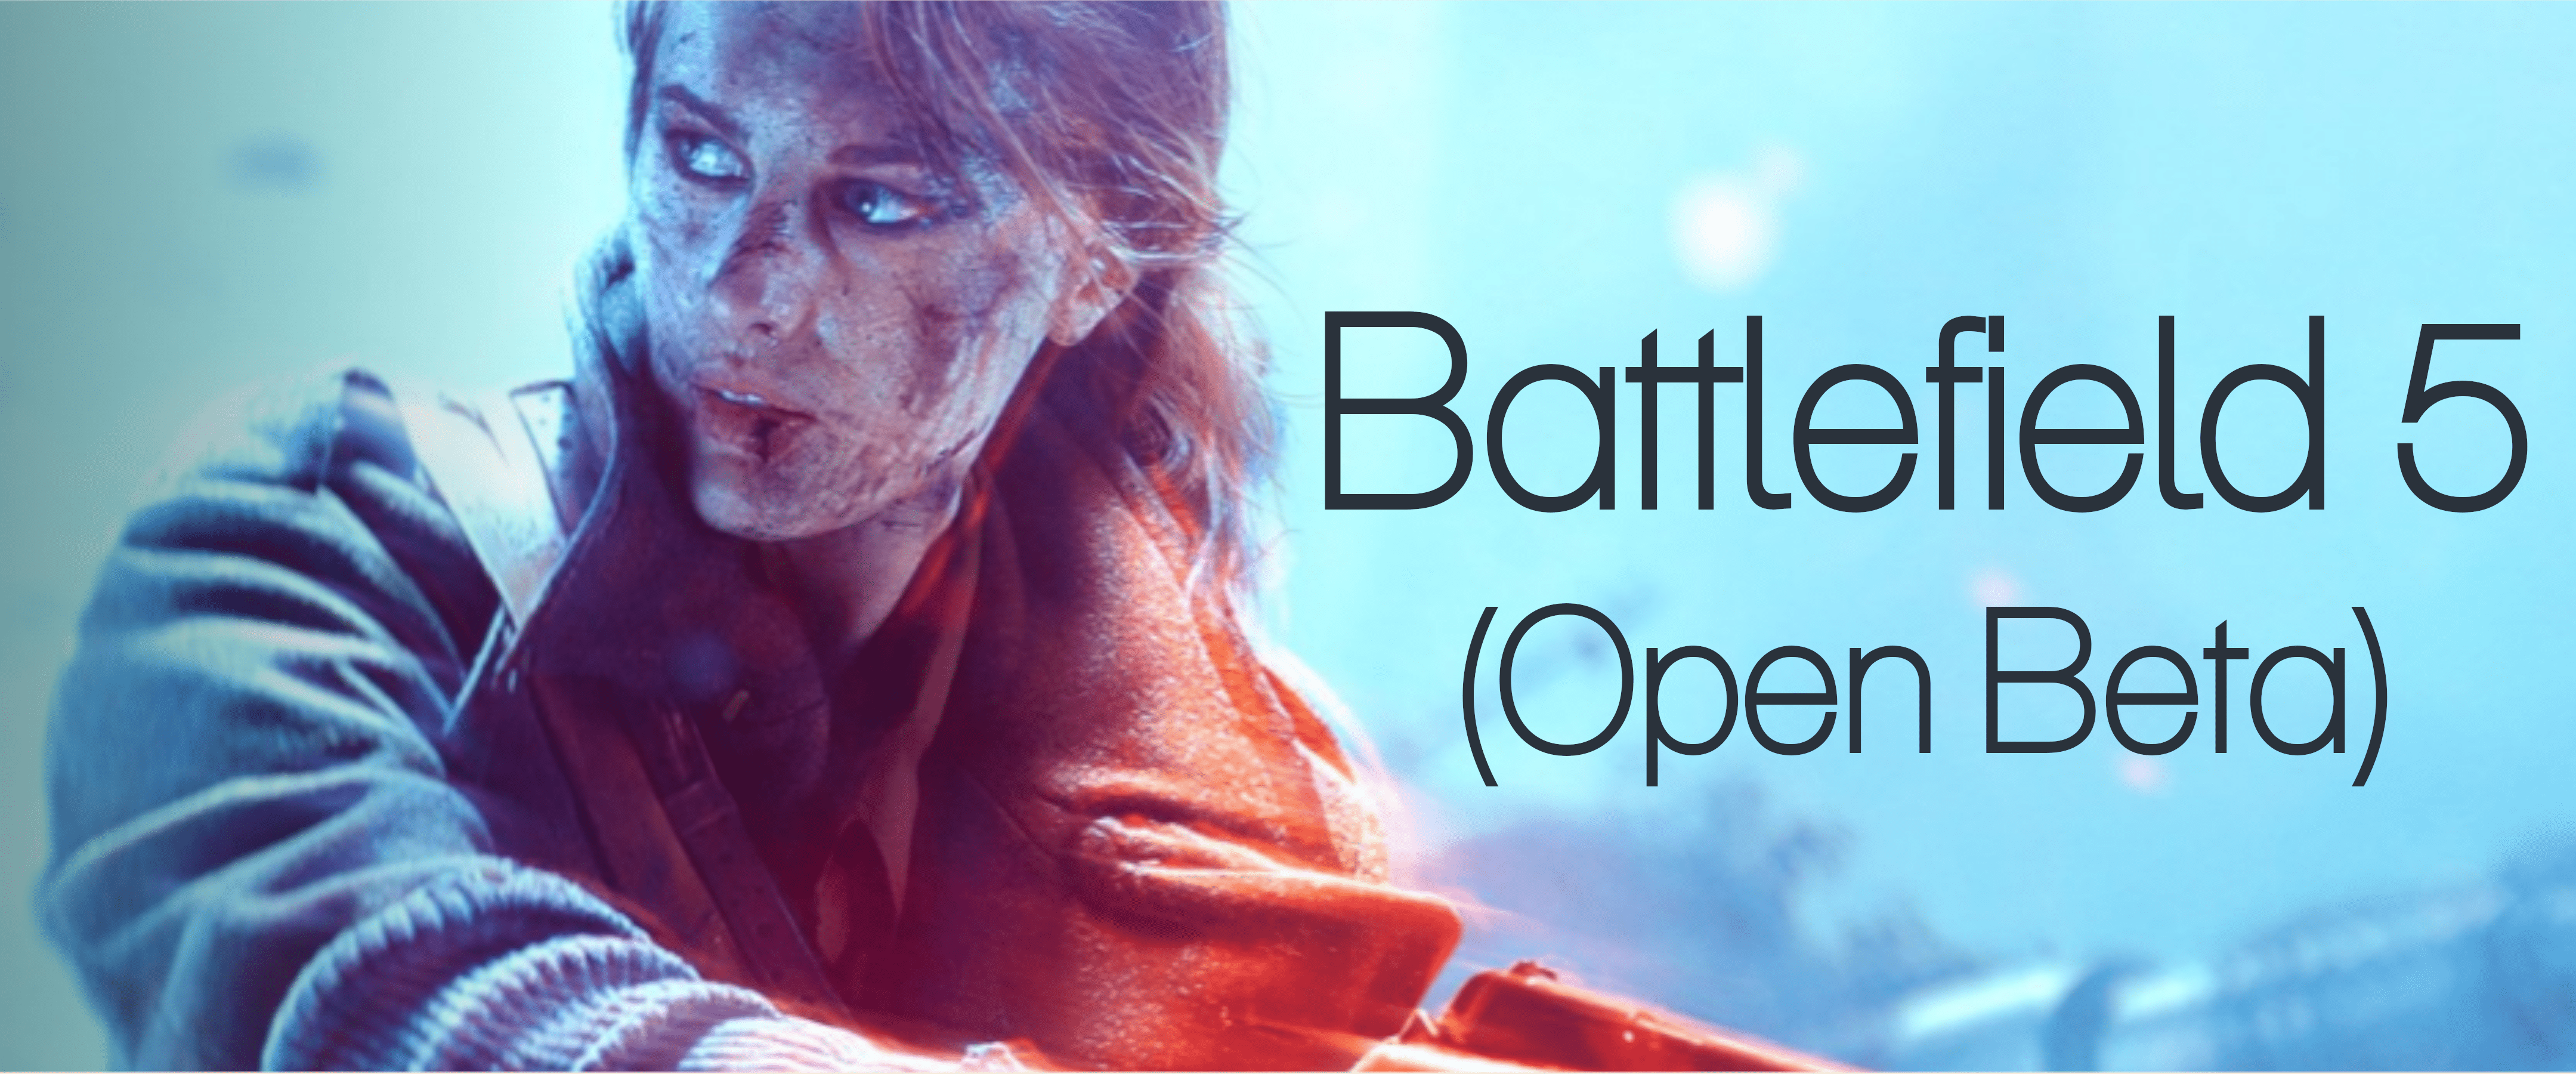 Battlefield 5 (Open Beta) 10